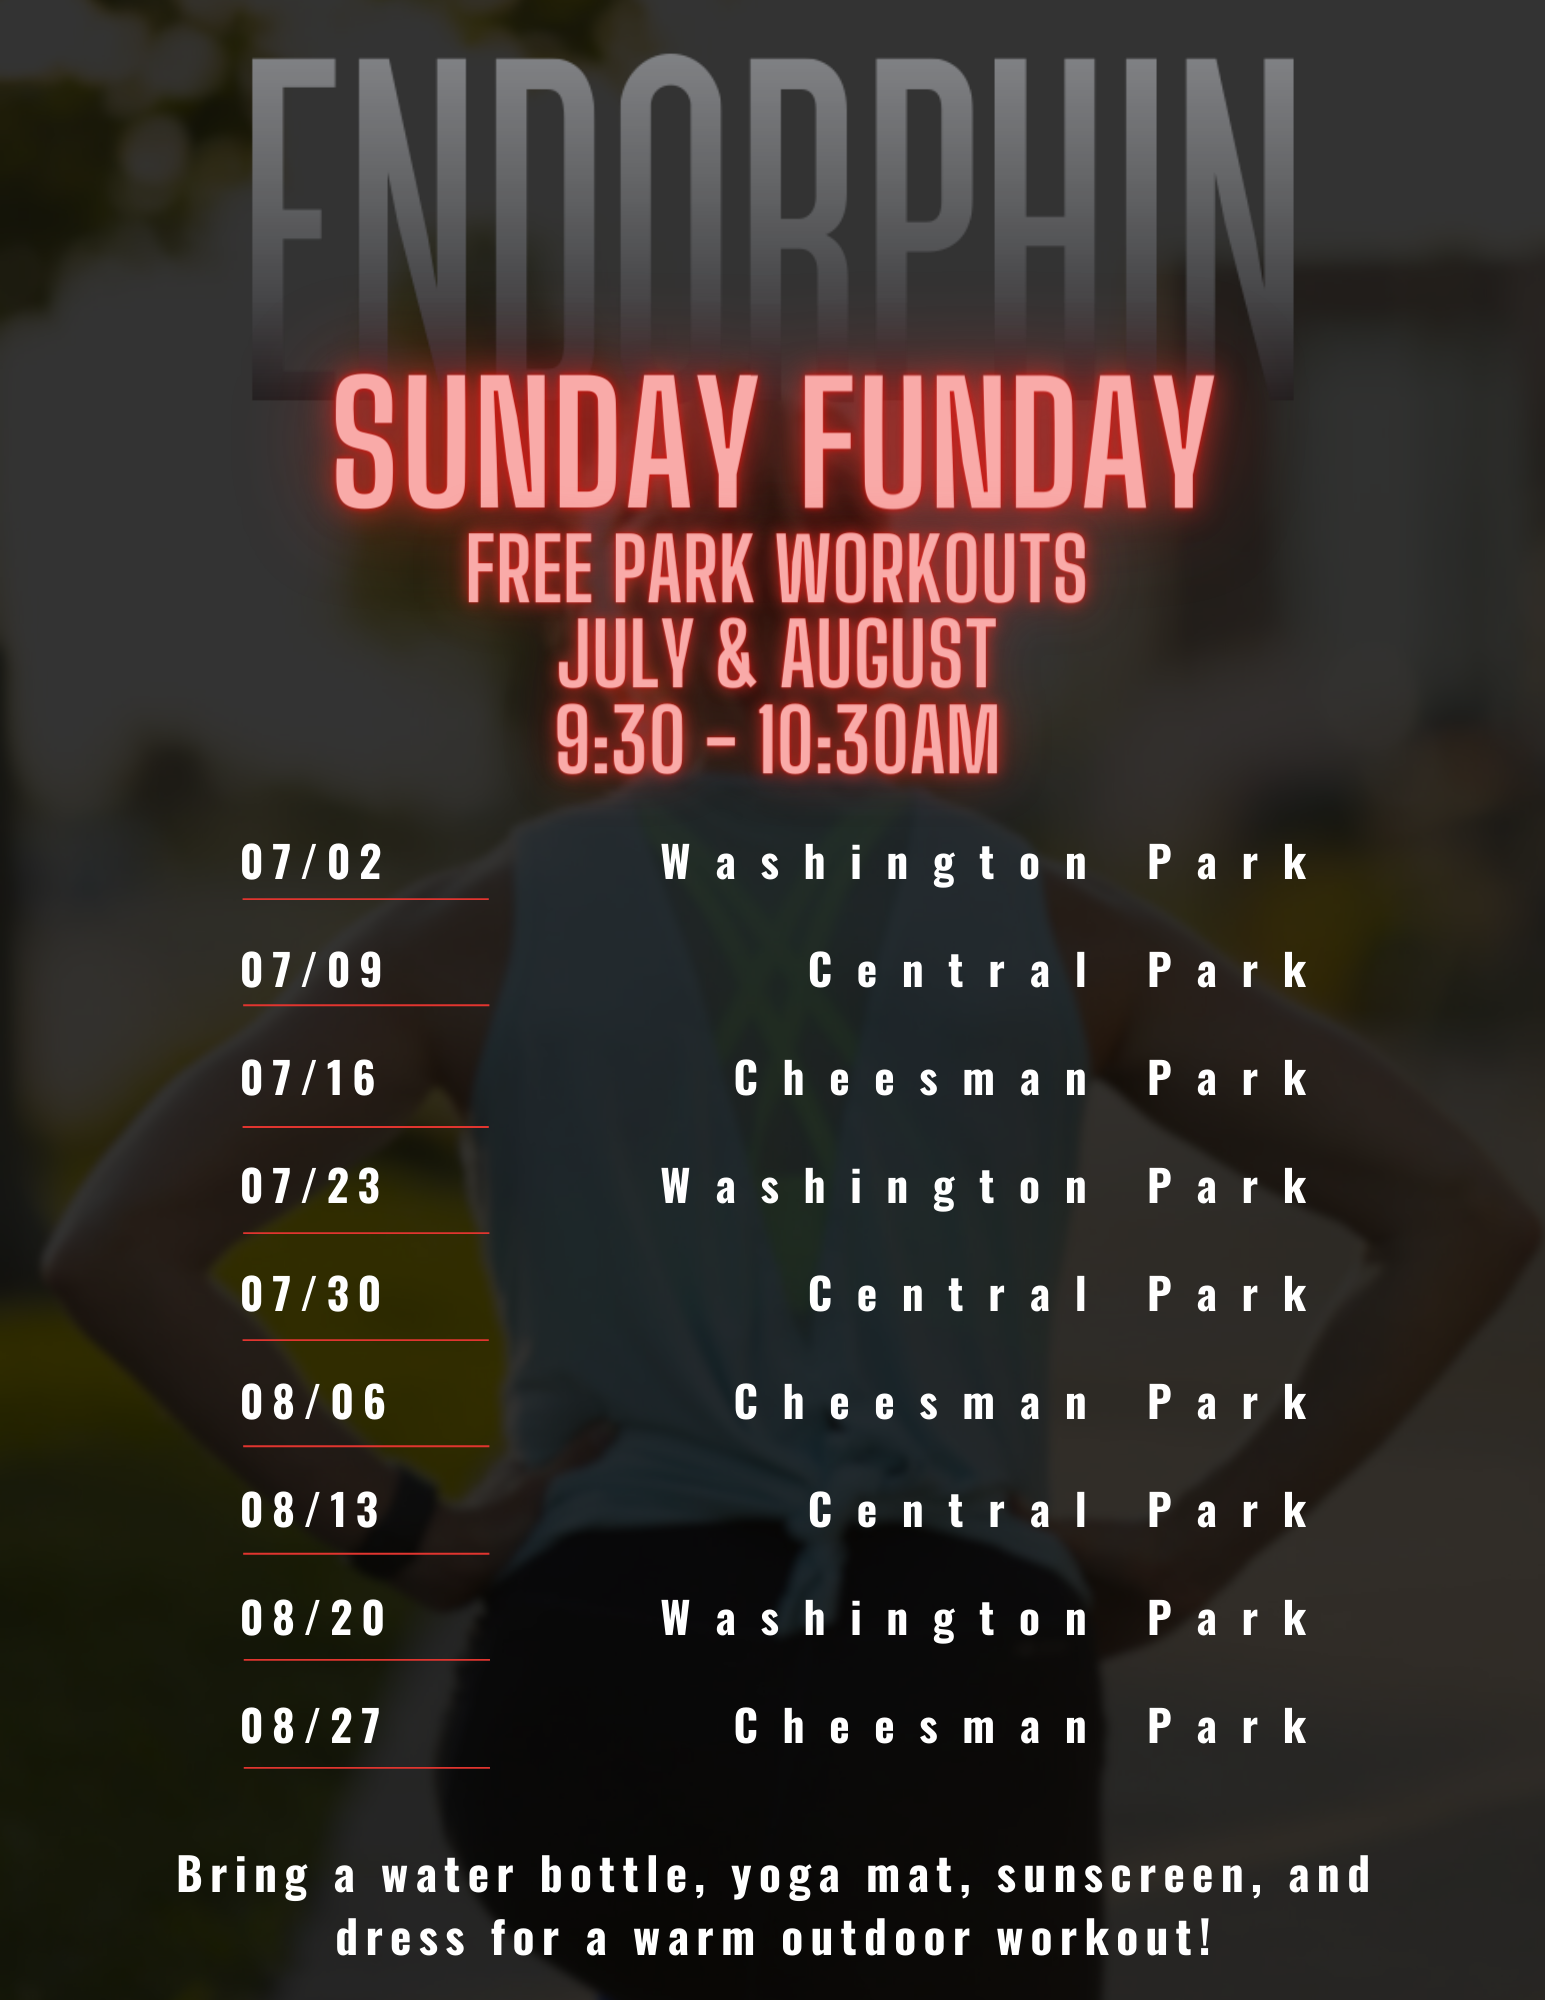 
Summer Sunday Funday Park Workouts